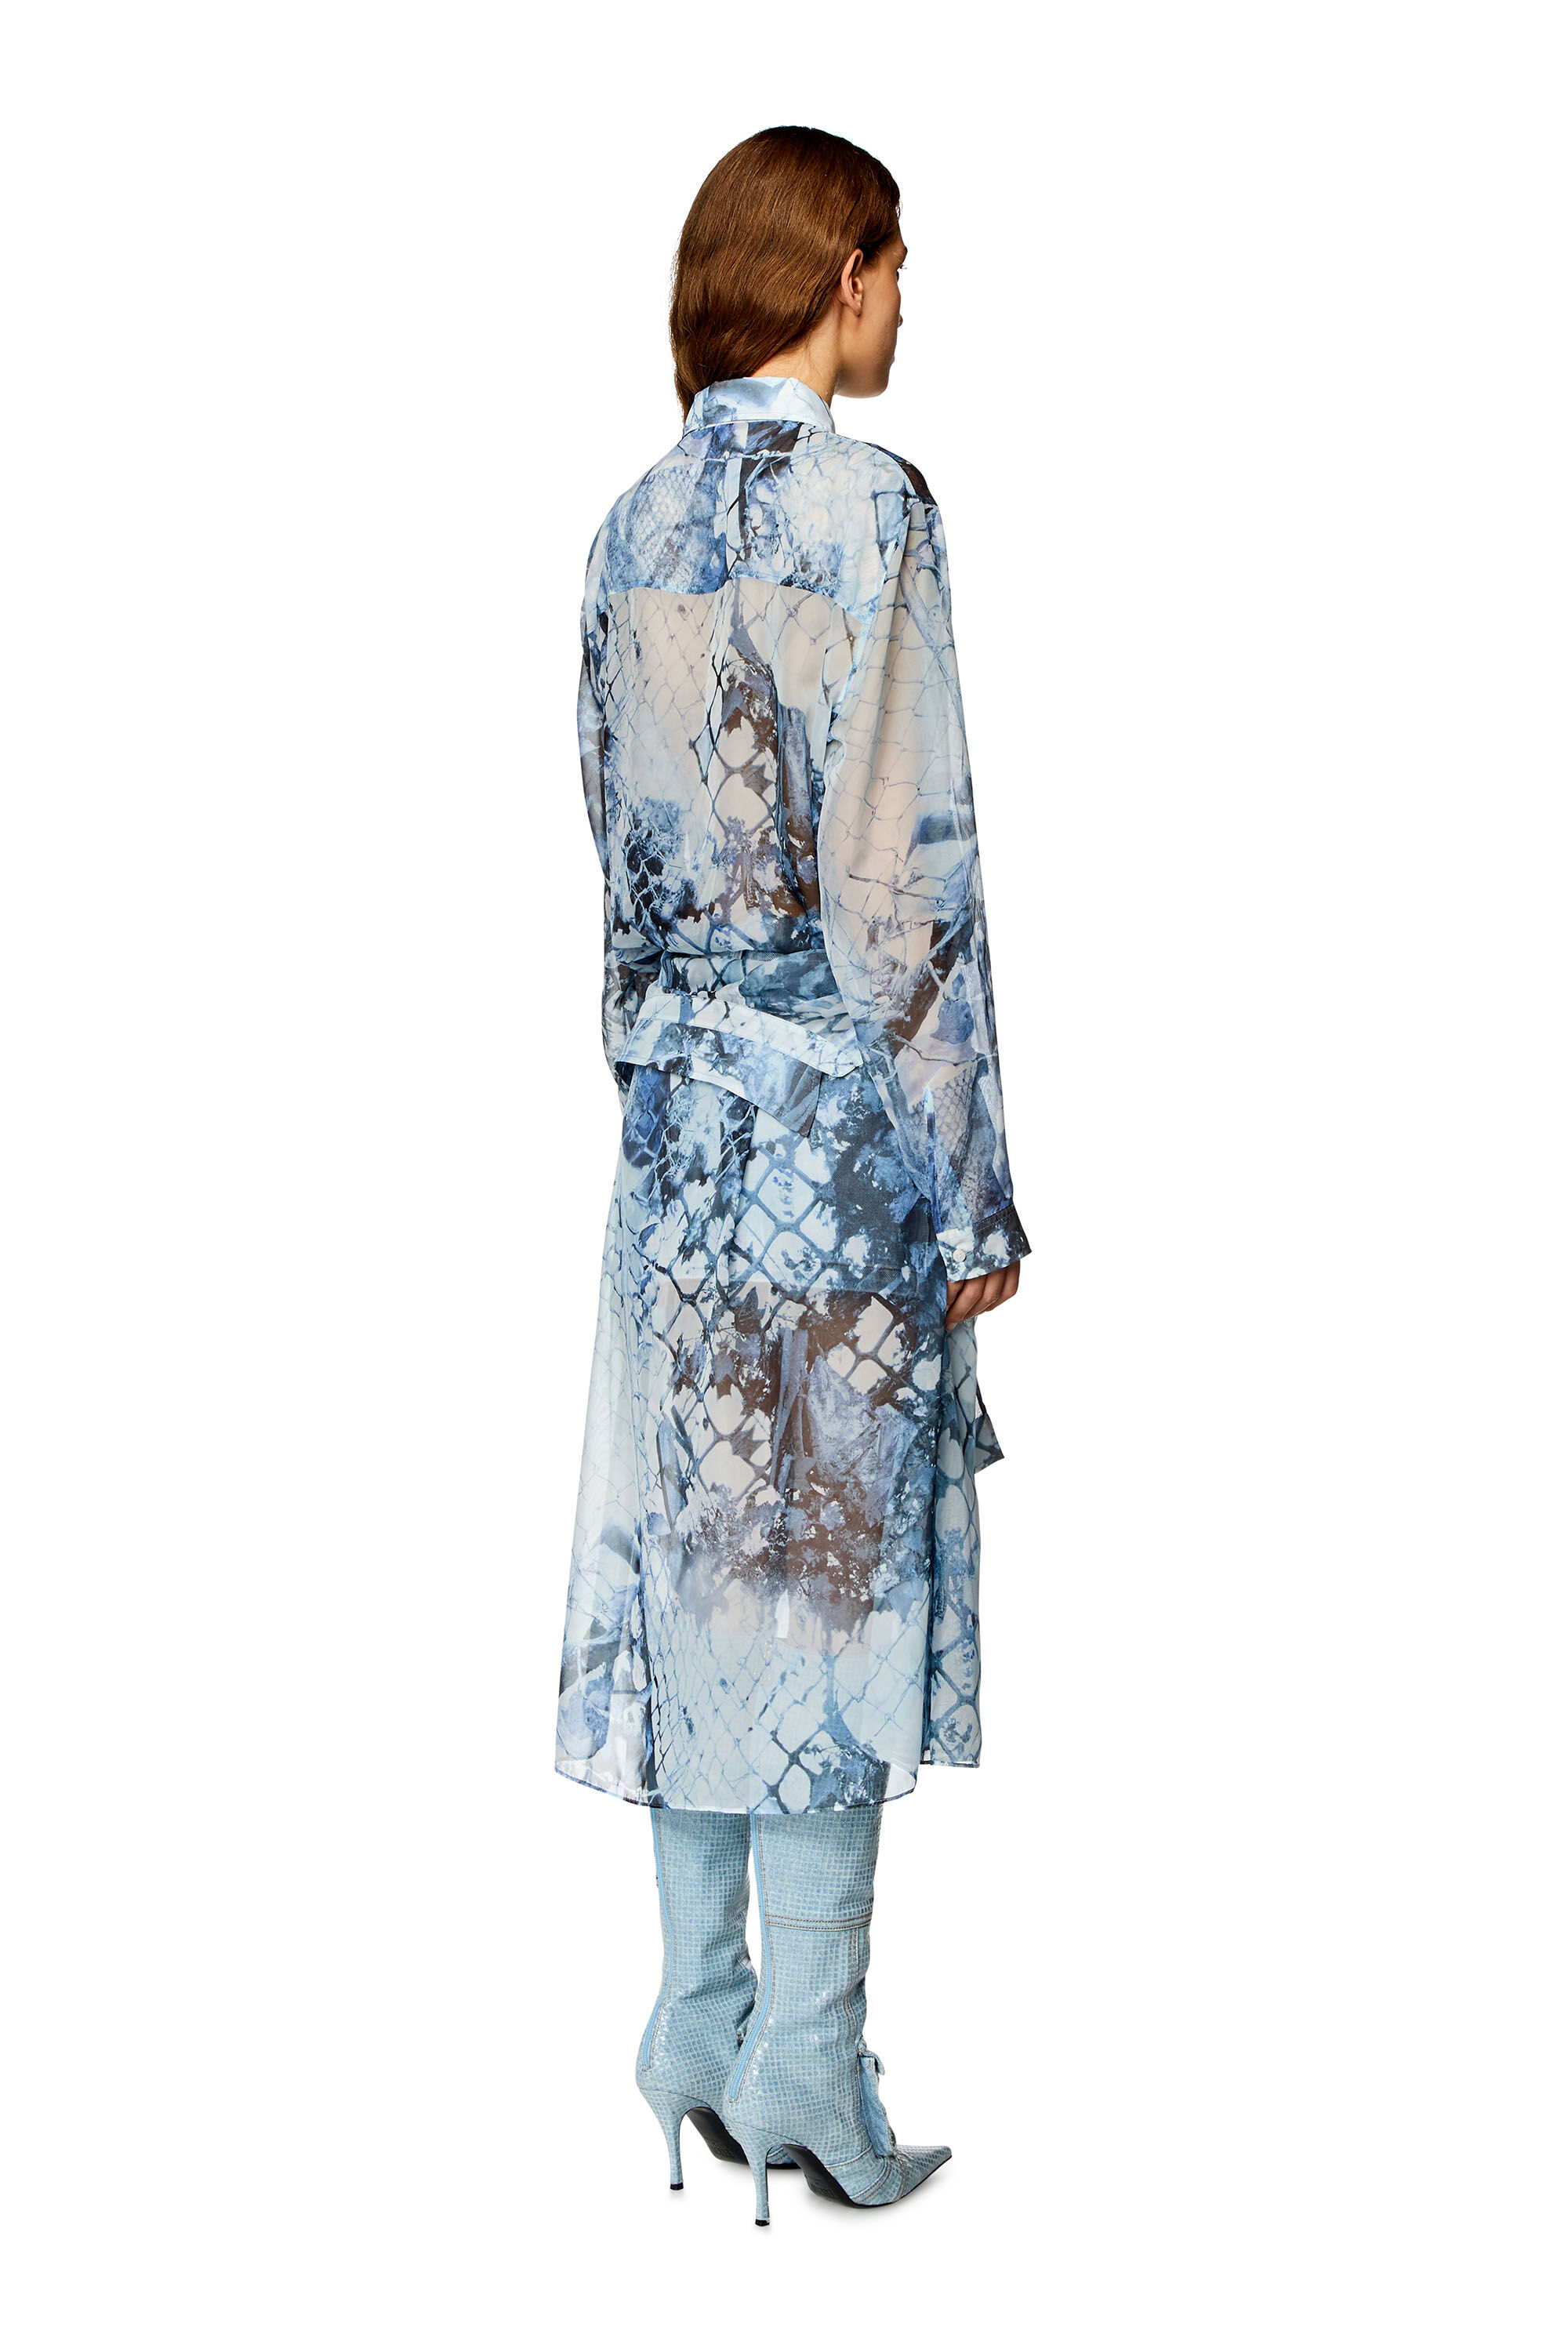 Diesel - D-JEANIEL, Woman Short shirt dress in chiffon and denim in Blue - Image 4